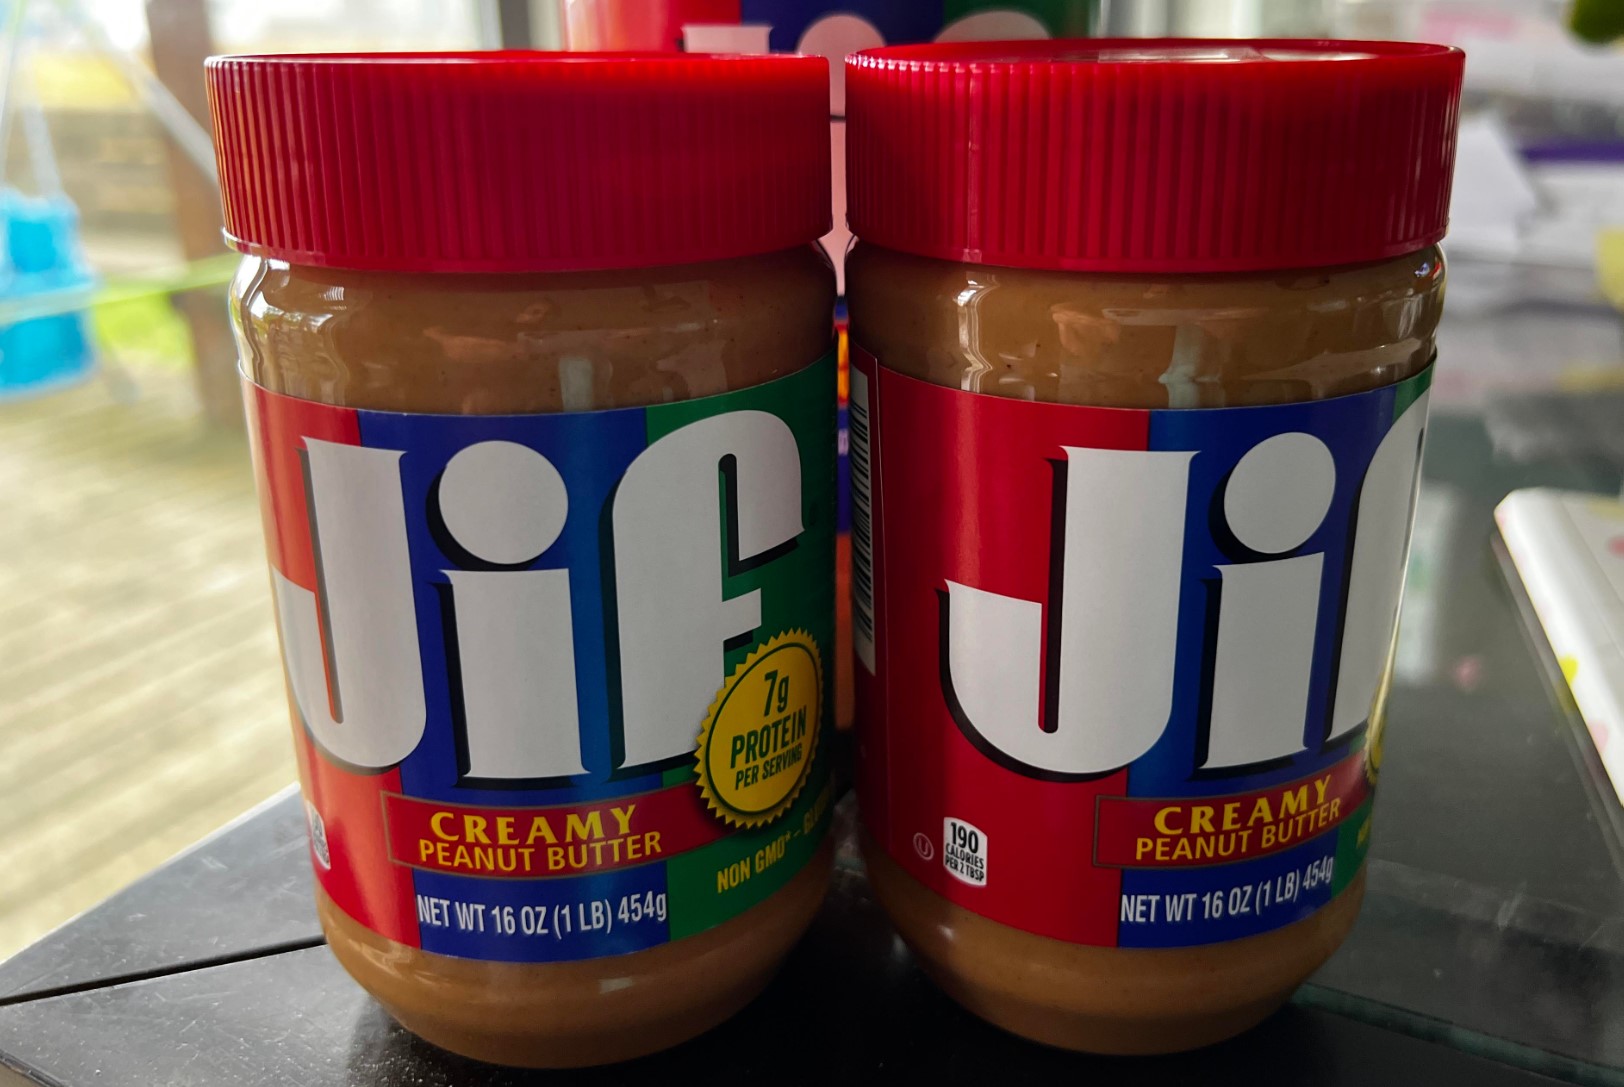 Jif peanut butter recall